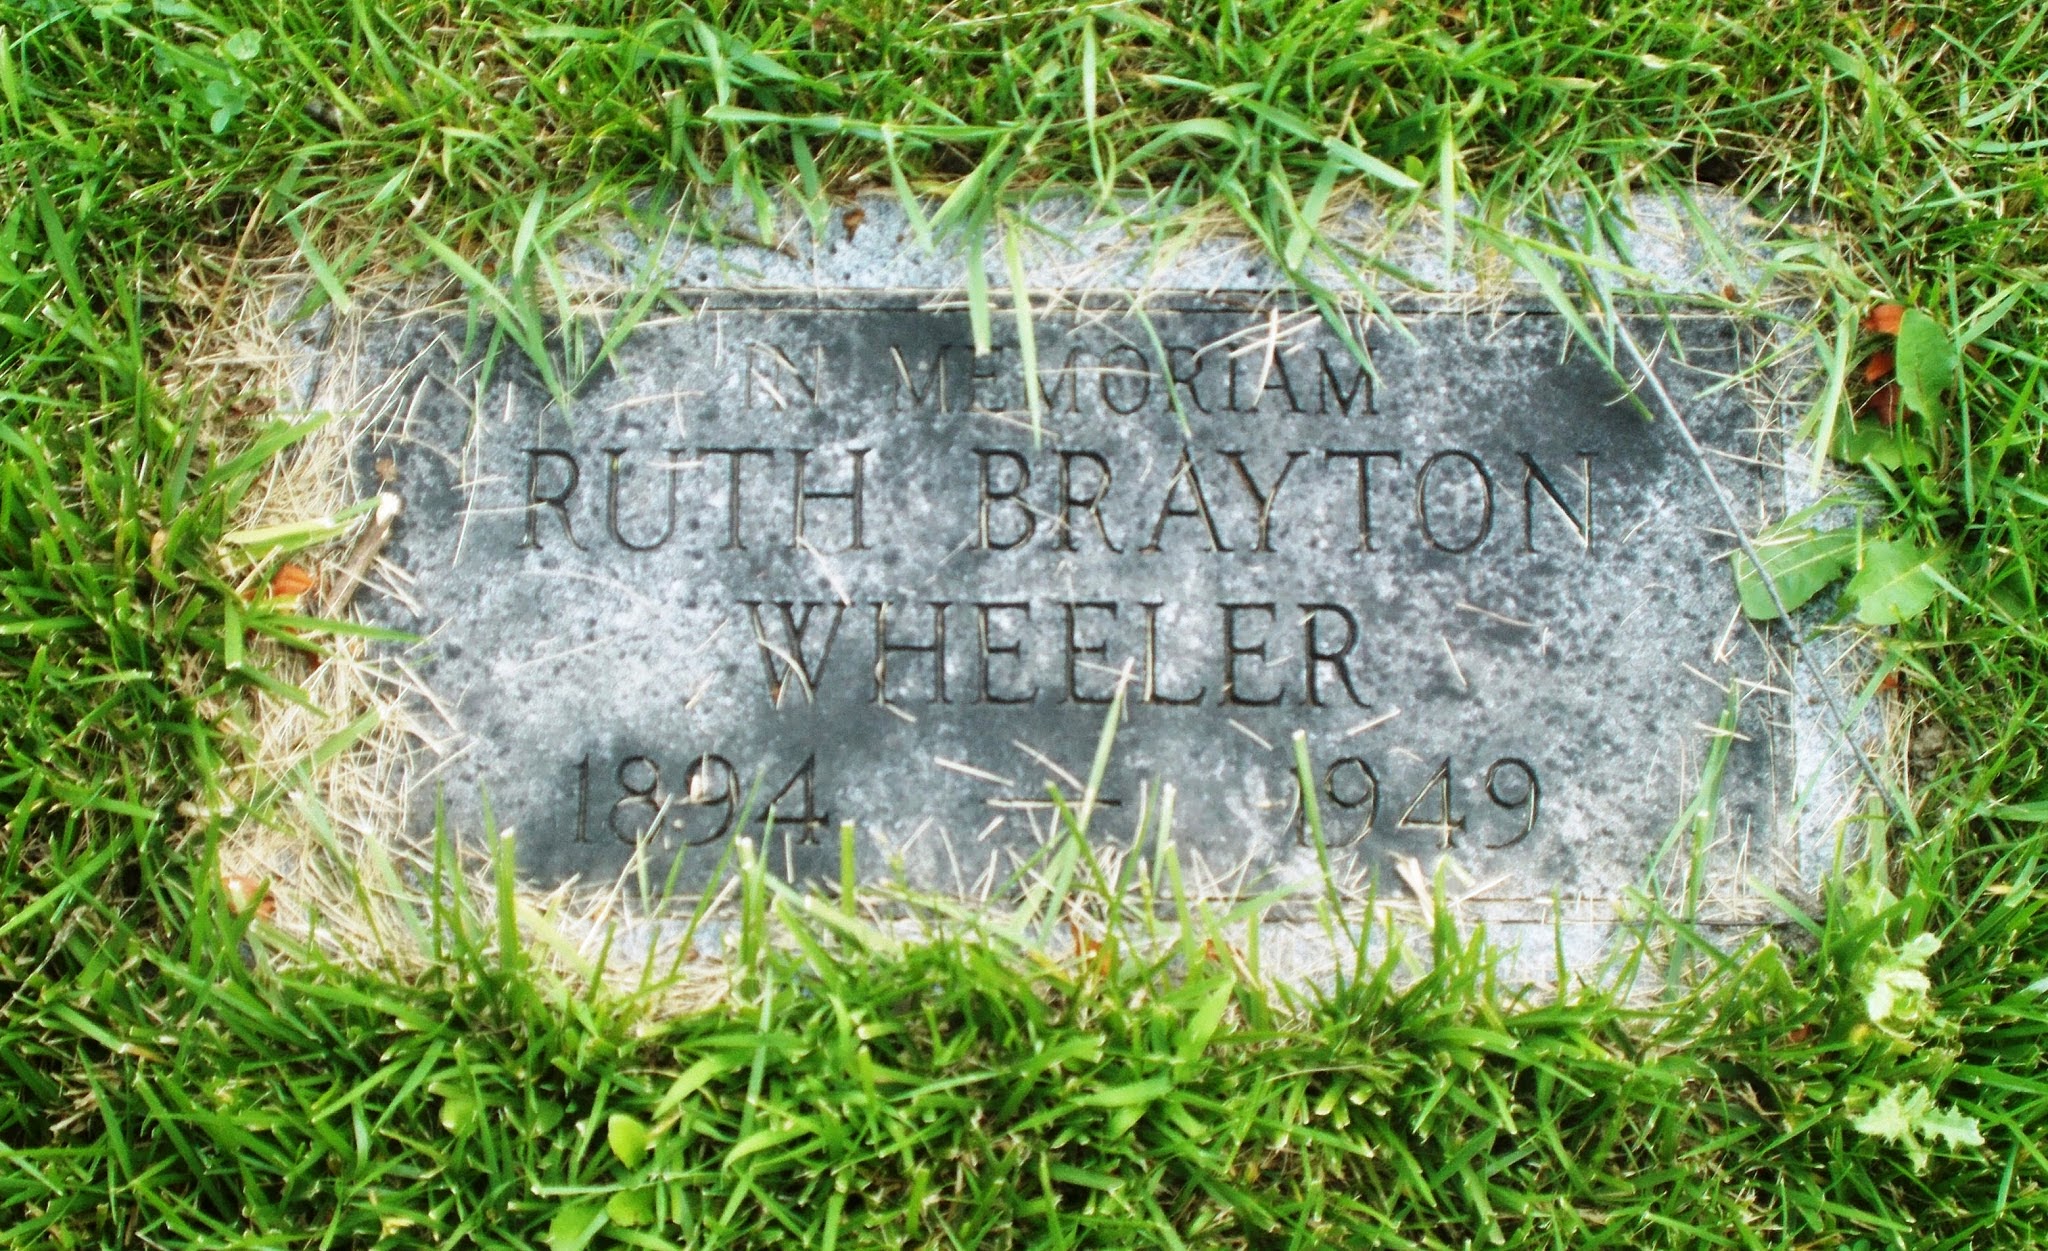 Ruth Brayton Wheeler